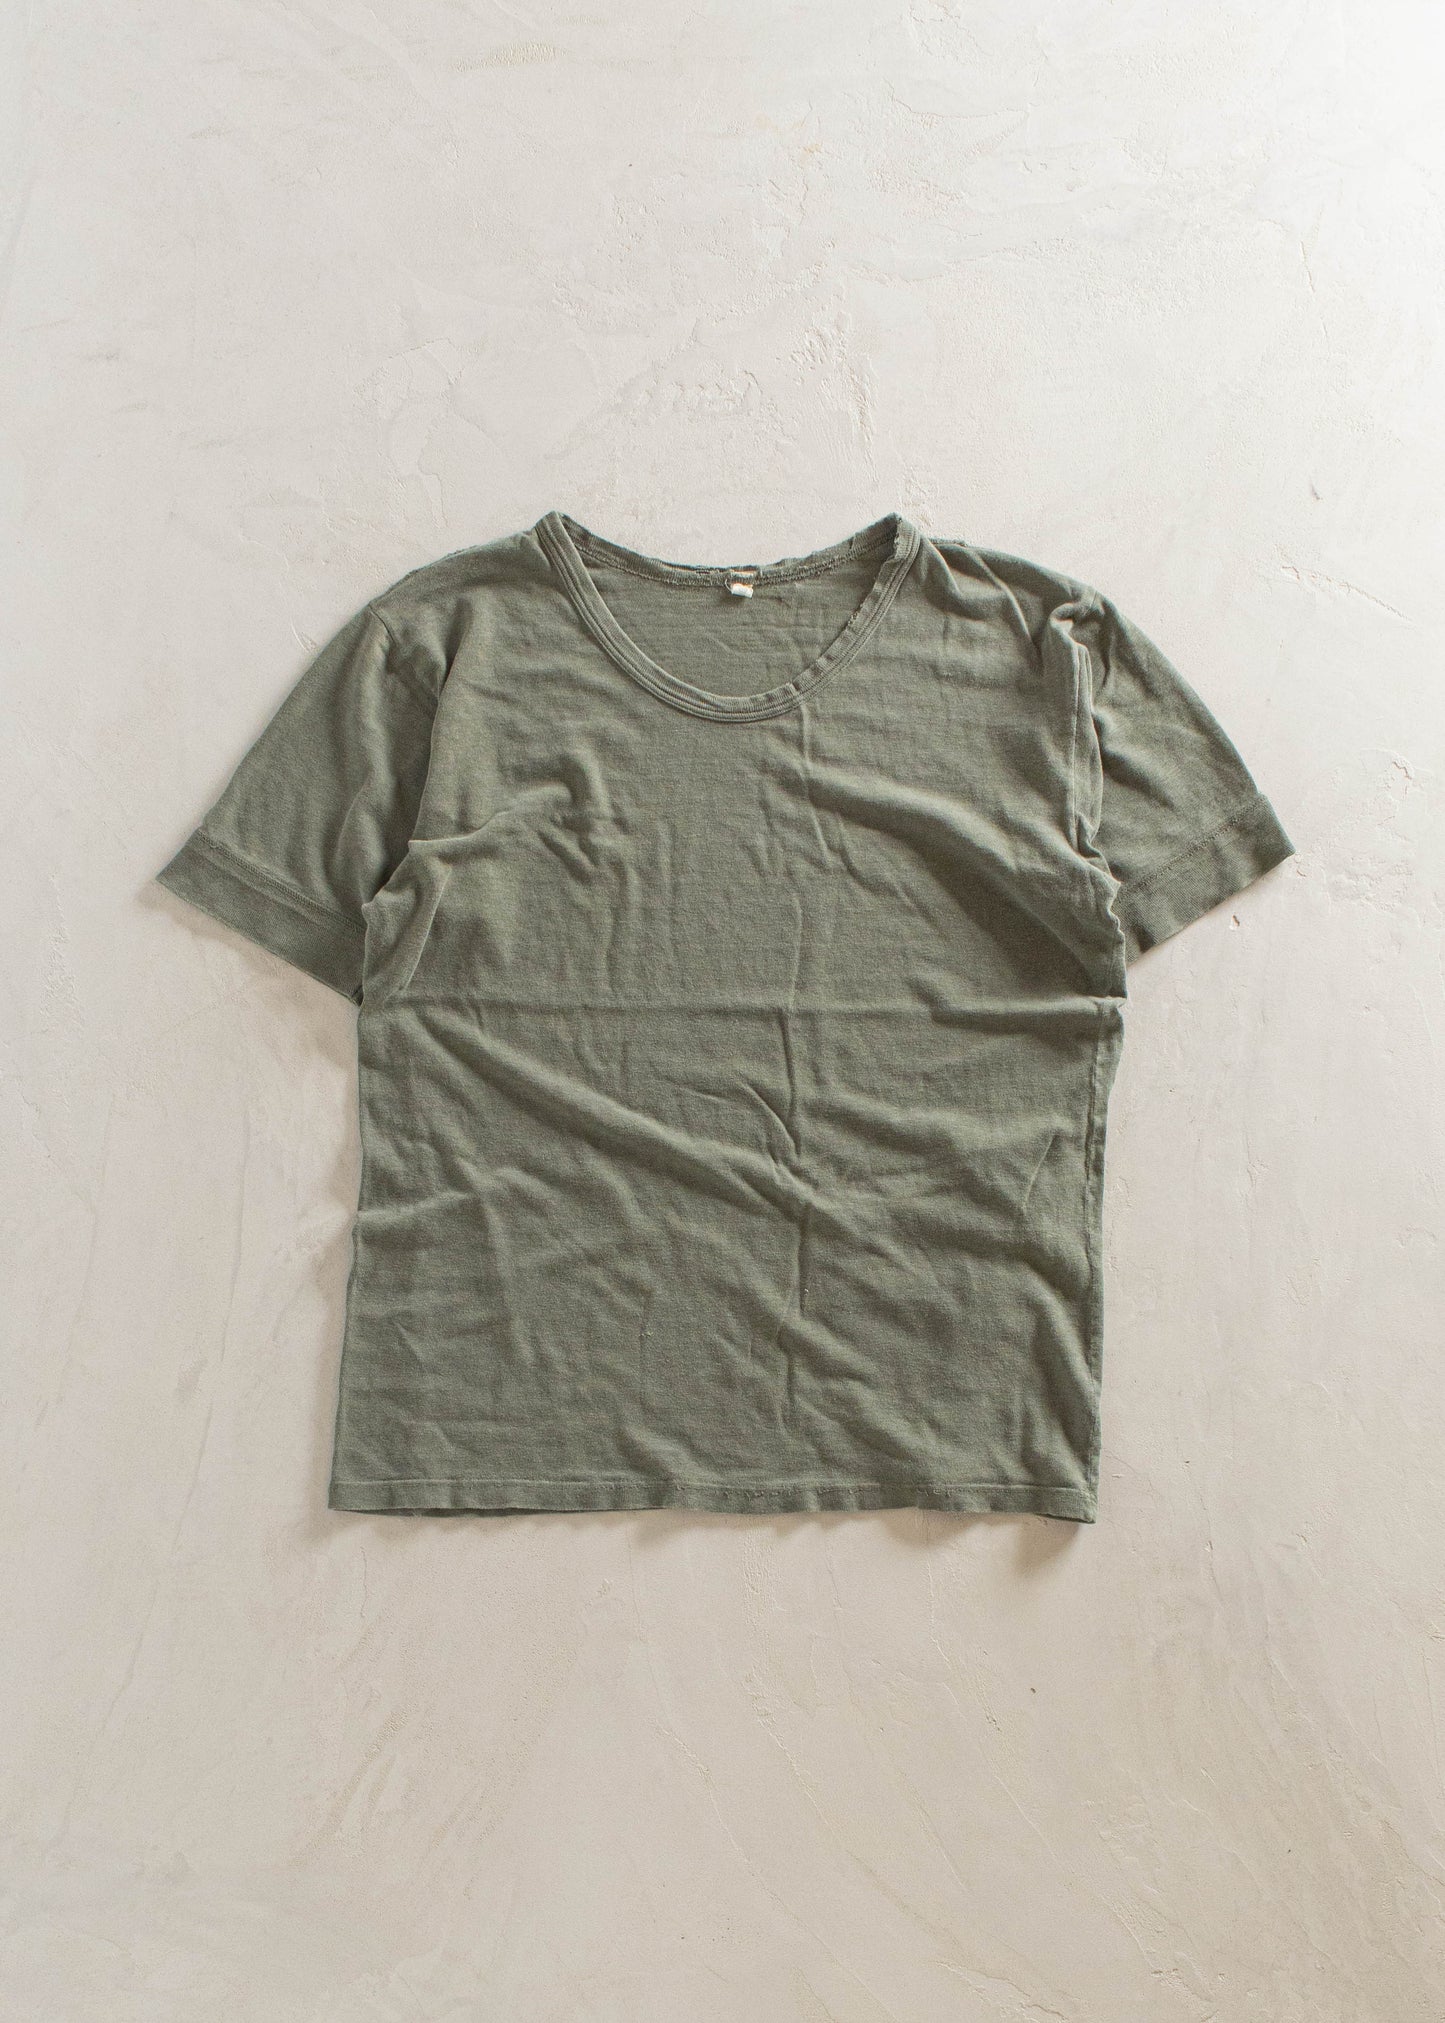 1980s Military T-Shirt Size M/L